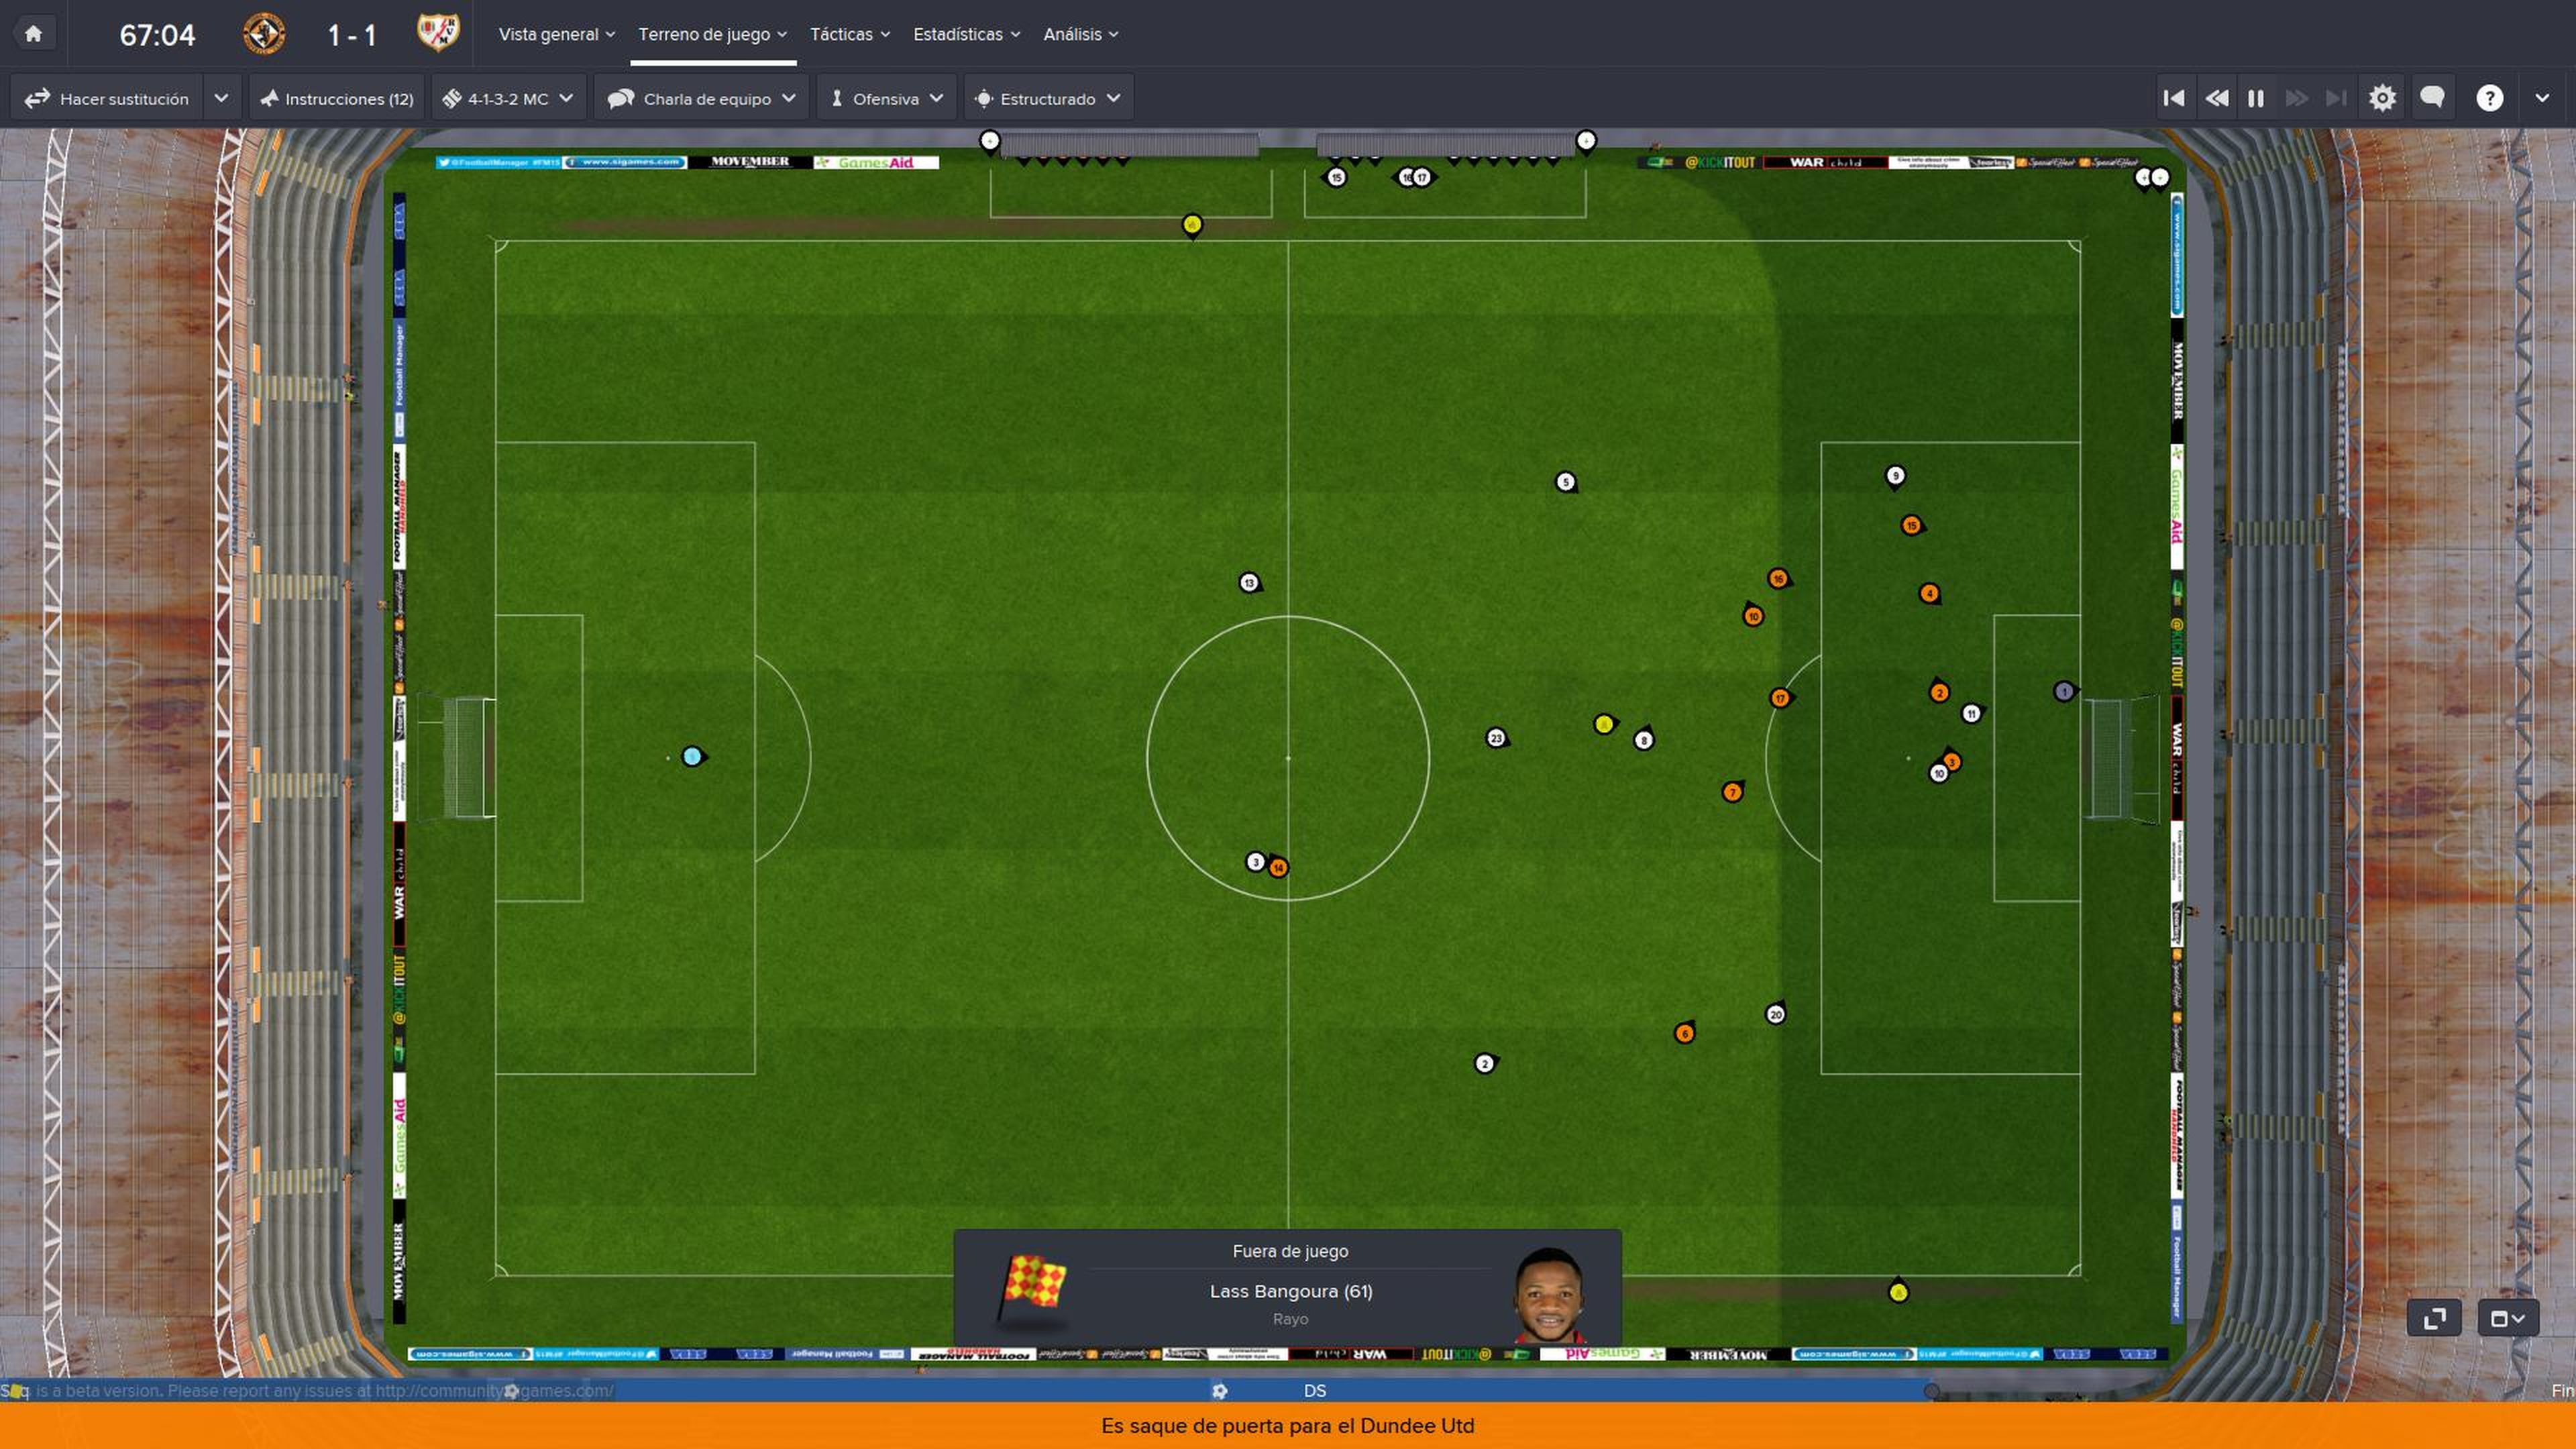 Análisis de Football Manager 2015 para PC